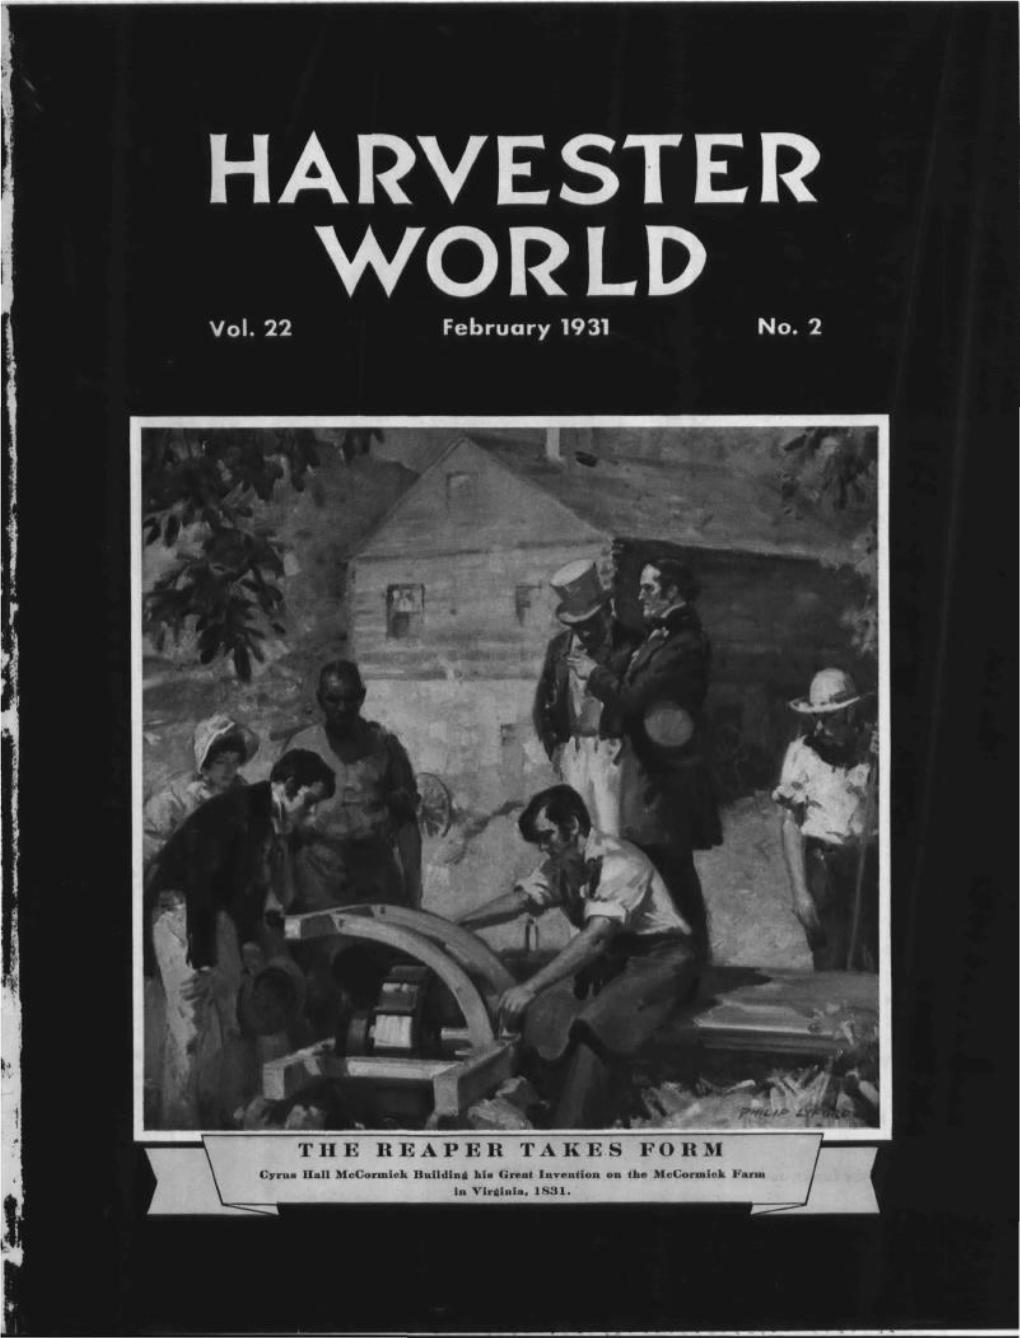 HARVESTER WORLD Vol